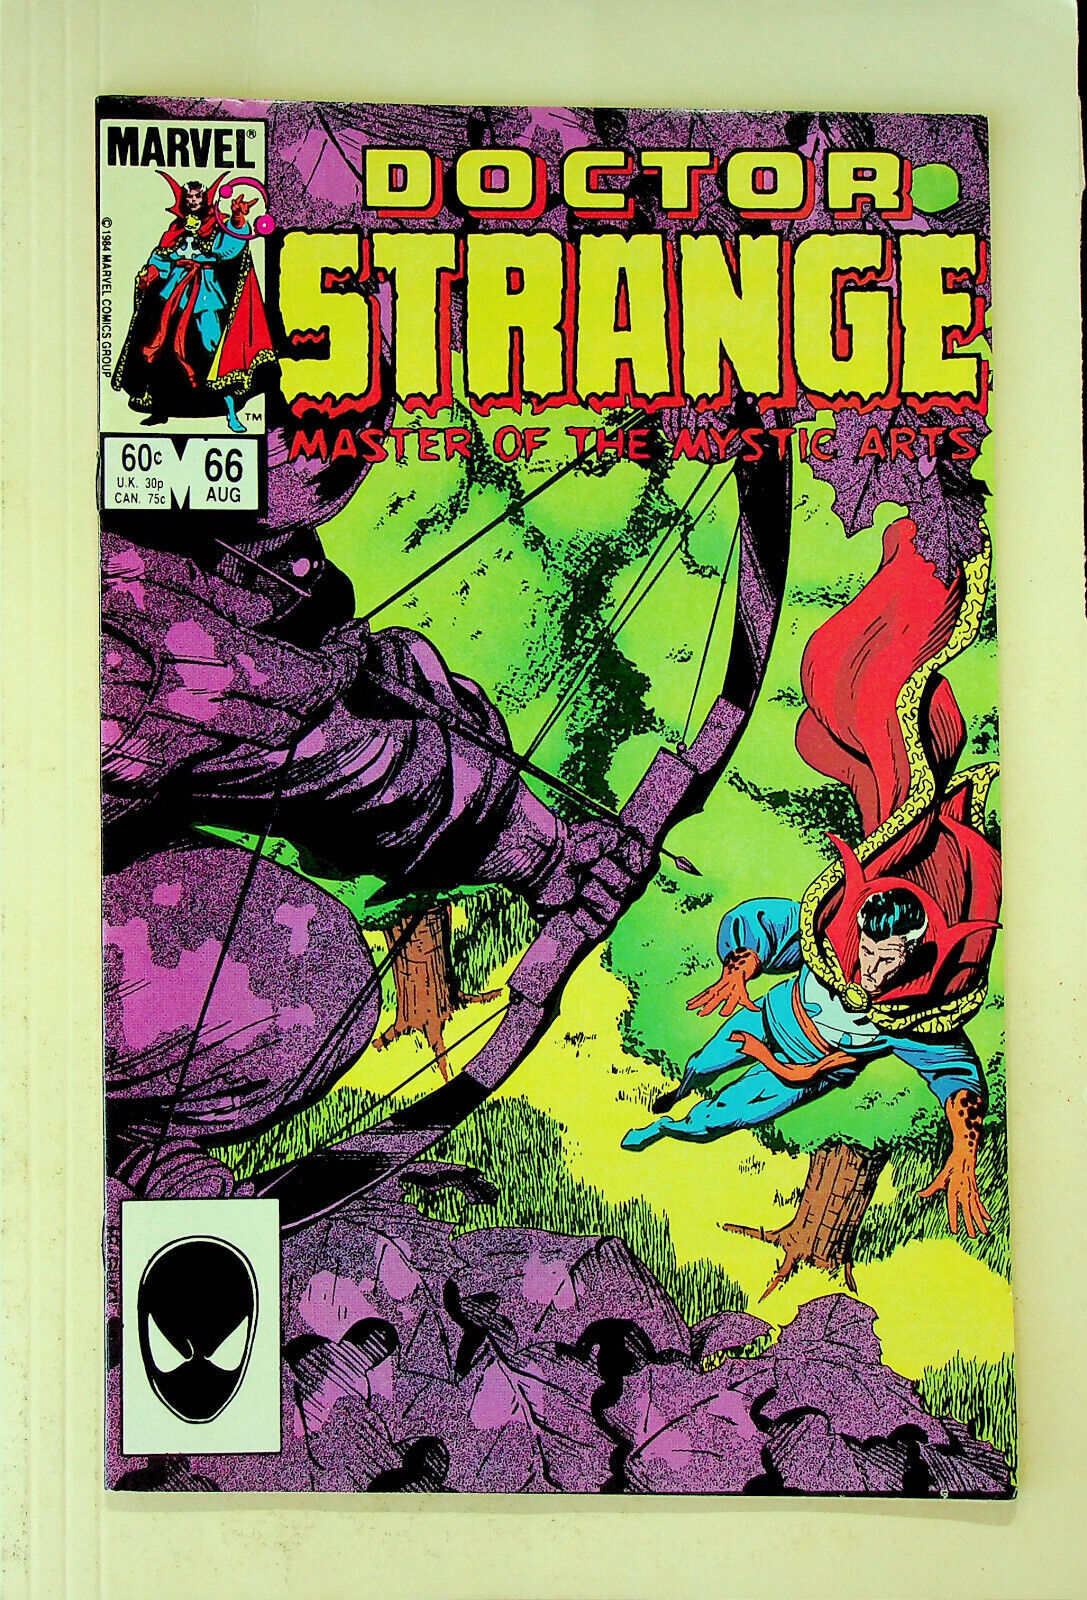 Primary image for Doctor Strange No. 66 - (Aug 1984, Marvel) - Near Mint/Mint